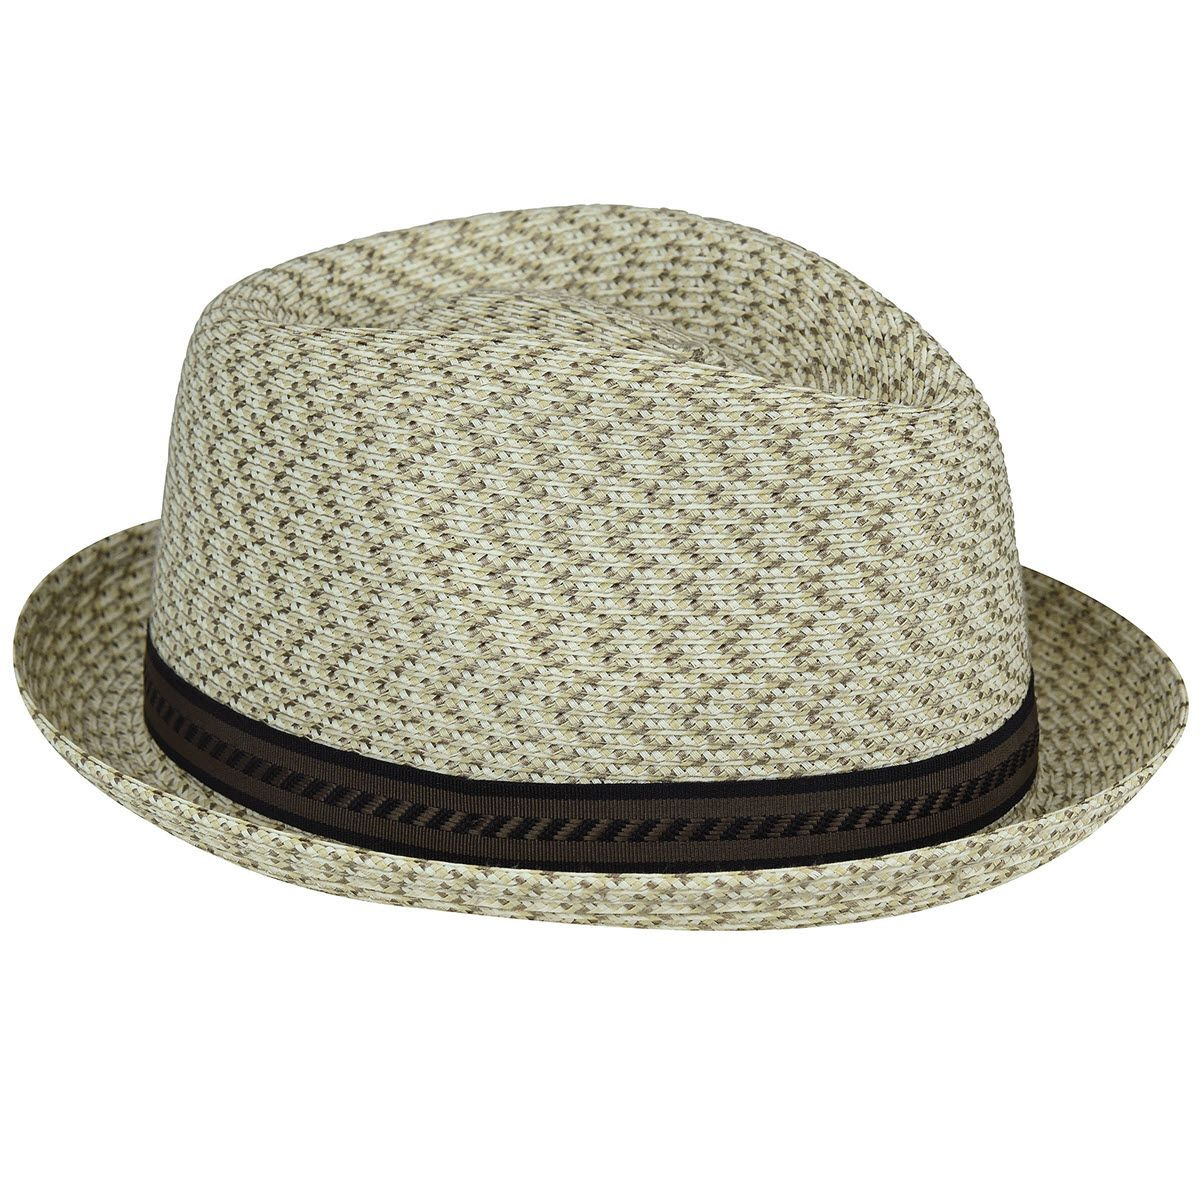 Trilby hat - buy trilby hats small brim